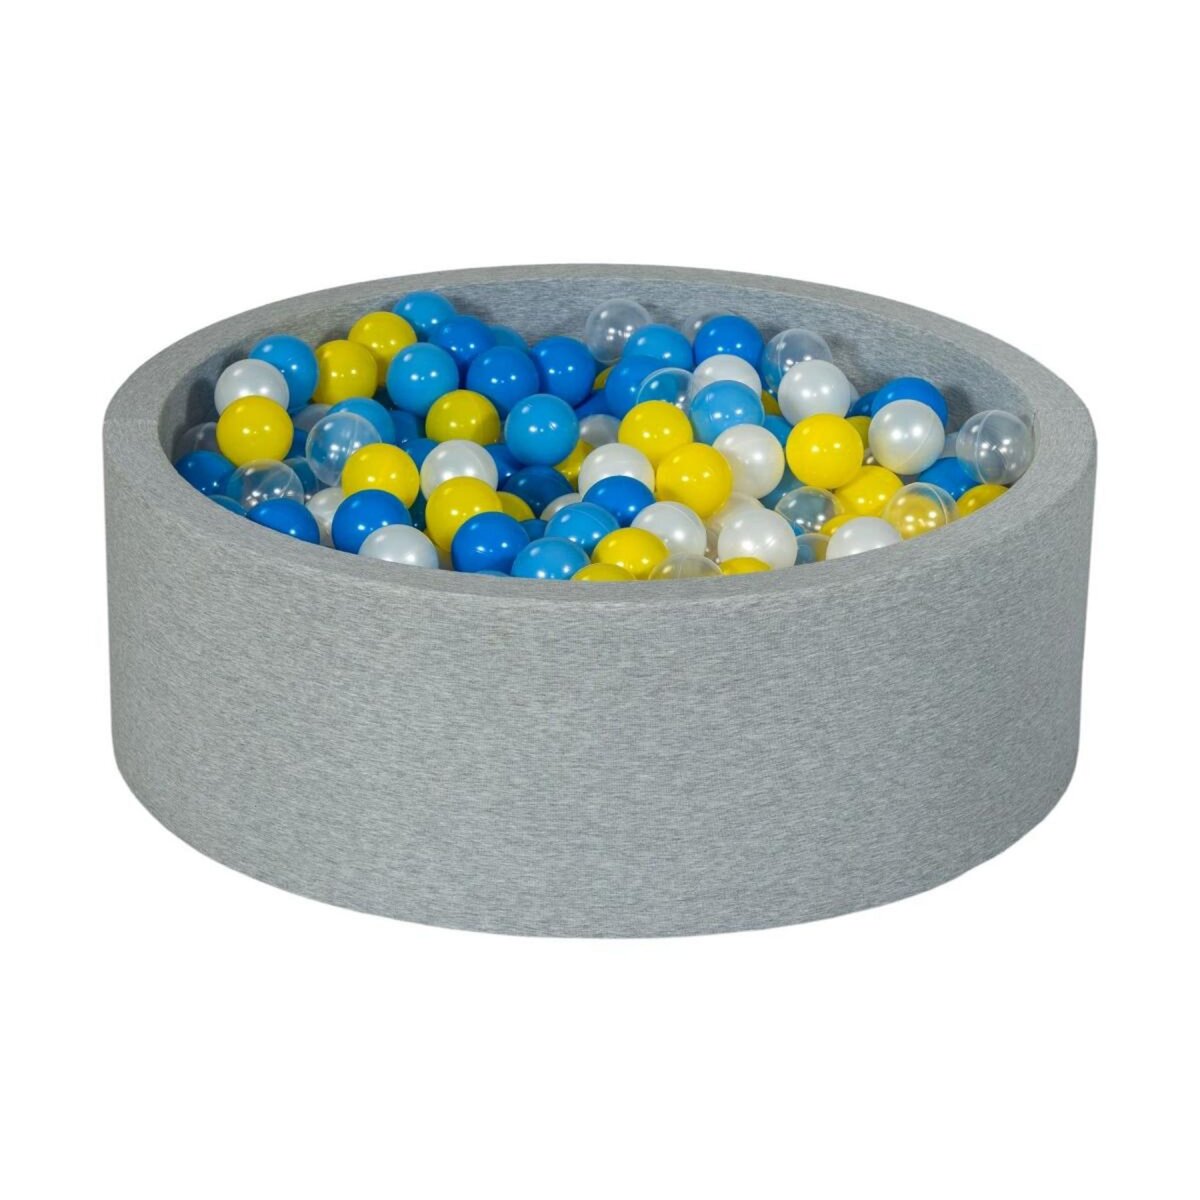  Piscine à balles perle, transparent, jaune, bleu, bleu clair -  450 balles